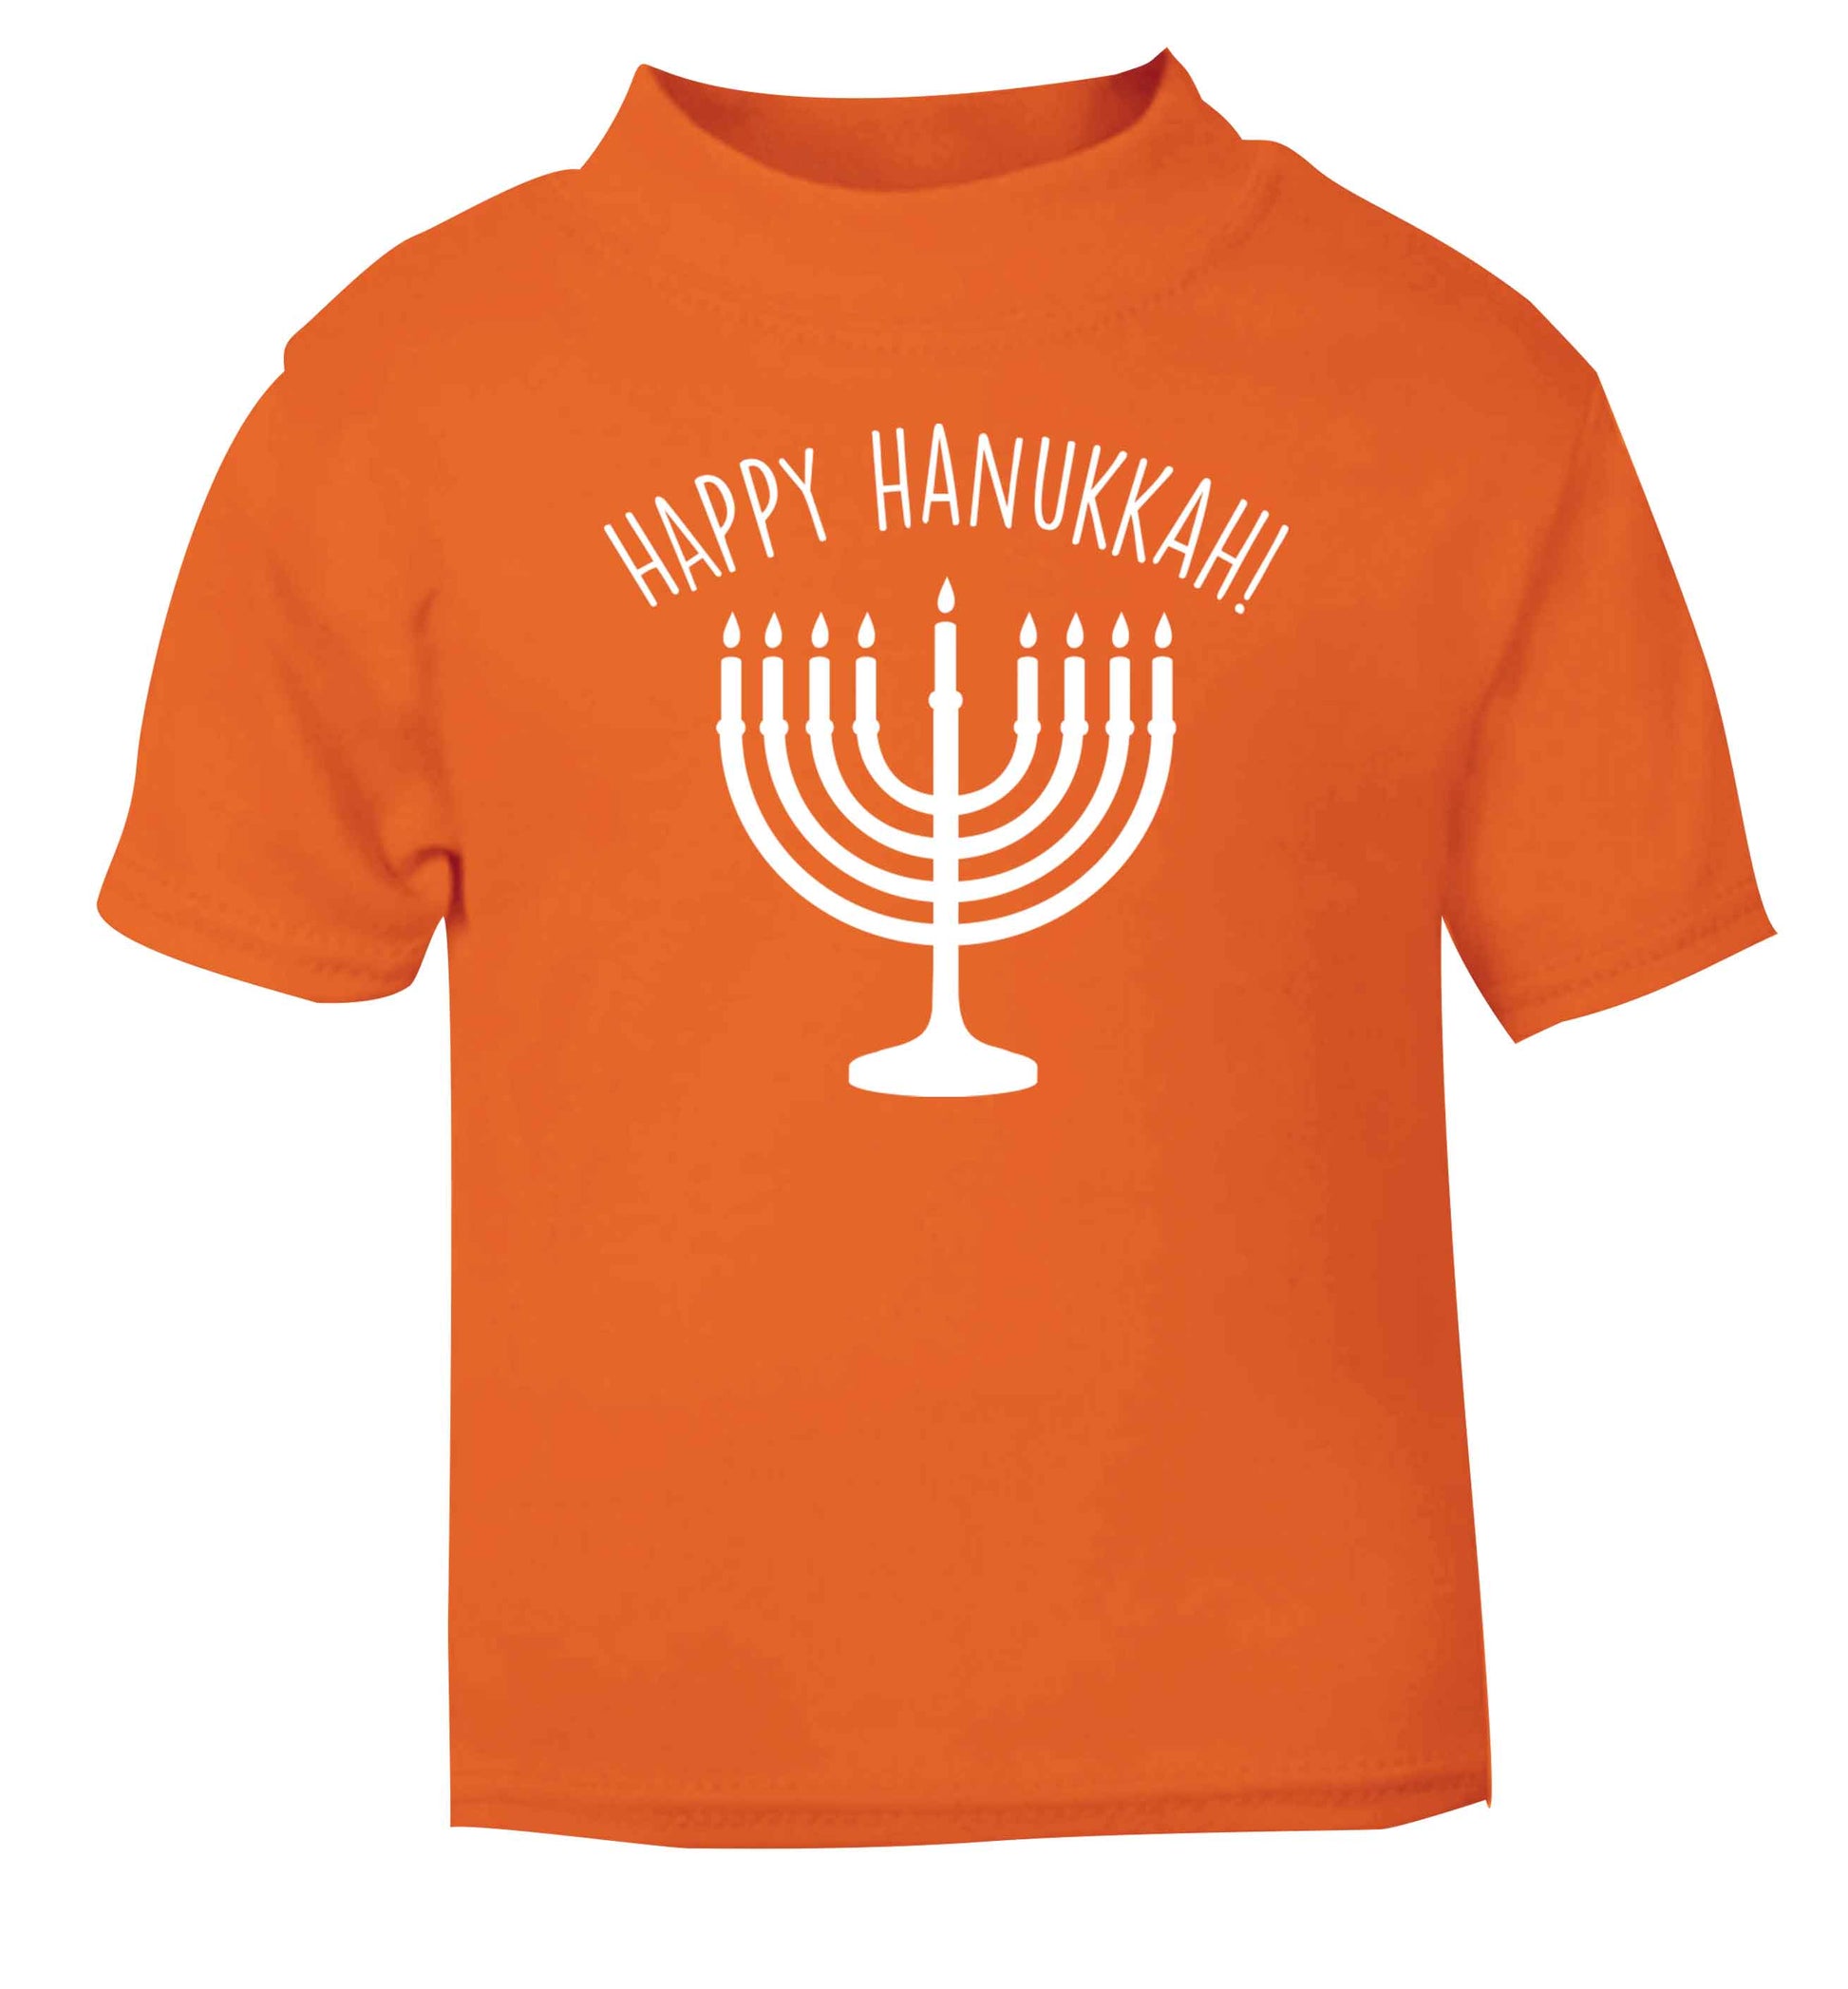 Happy hanukkah orange baby toddler Tshirt 2 Years